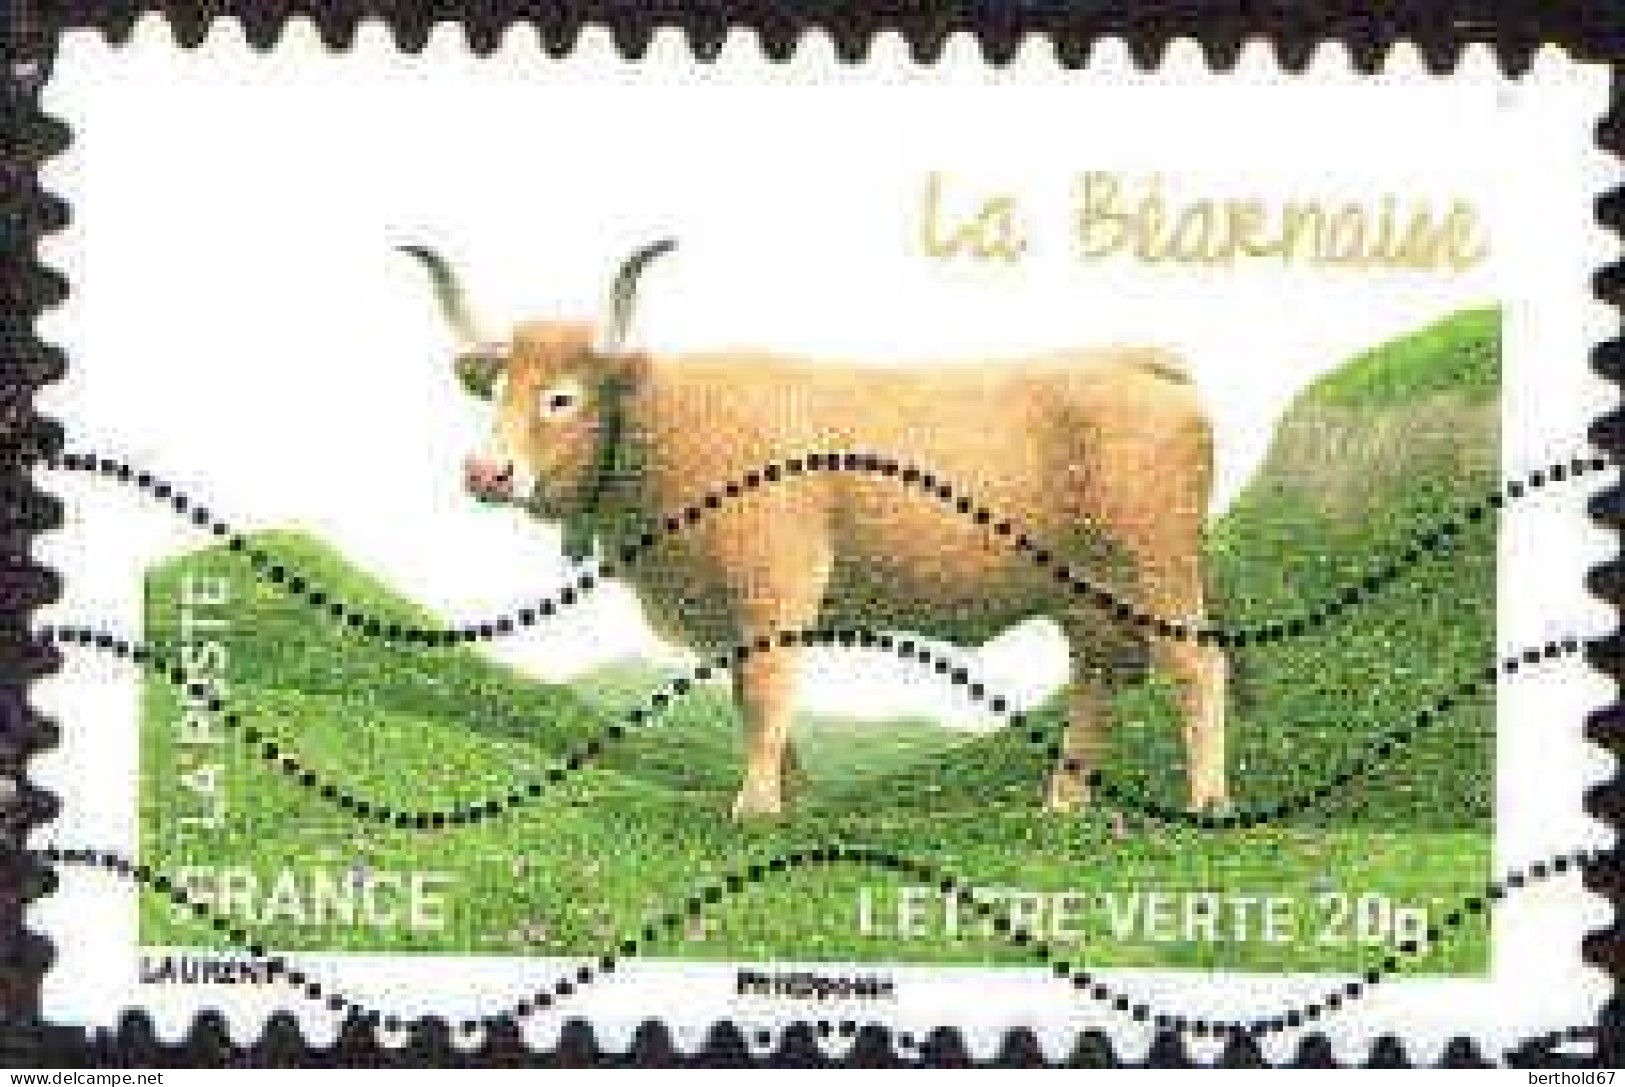 France Poste AA Obl Yv: 955 Mi:5781 La Béarnaise (Lign.Ondulées) (Thème) - Vacas